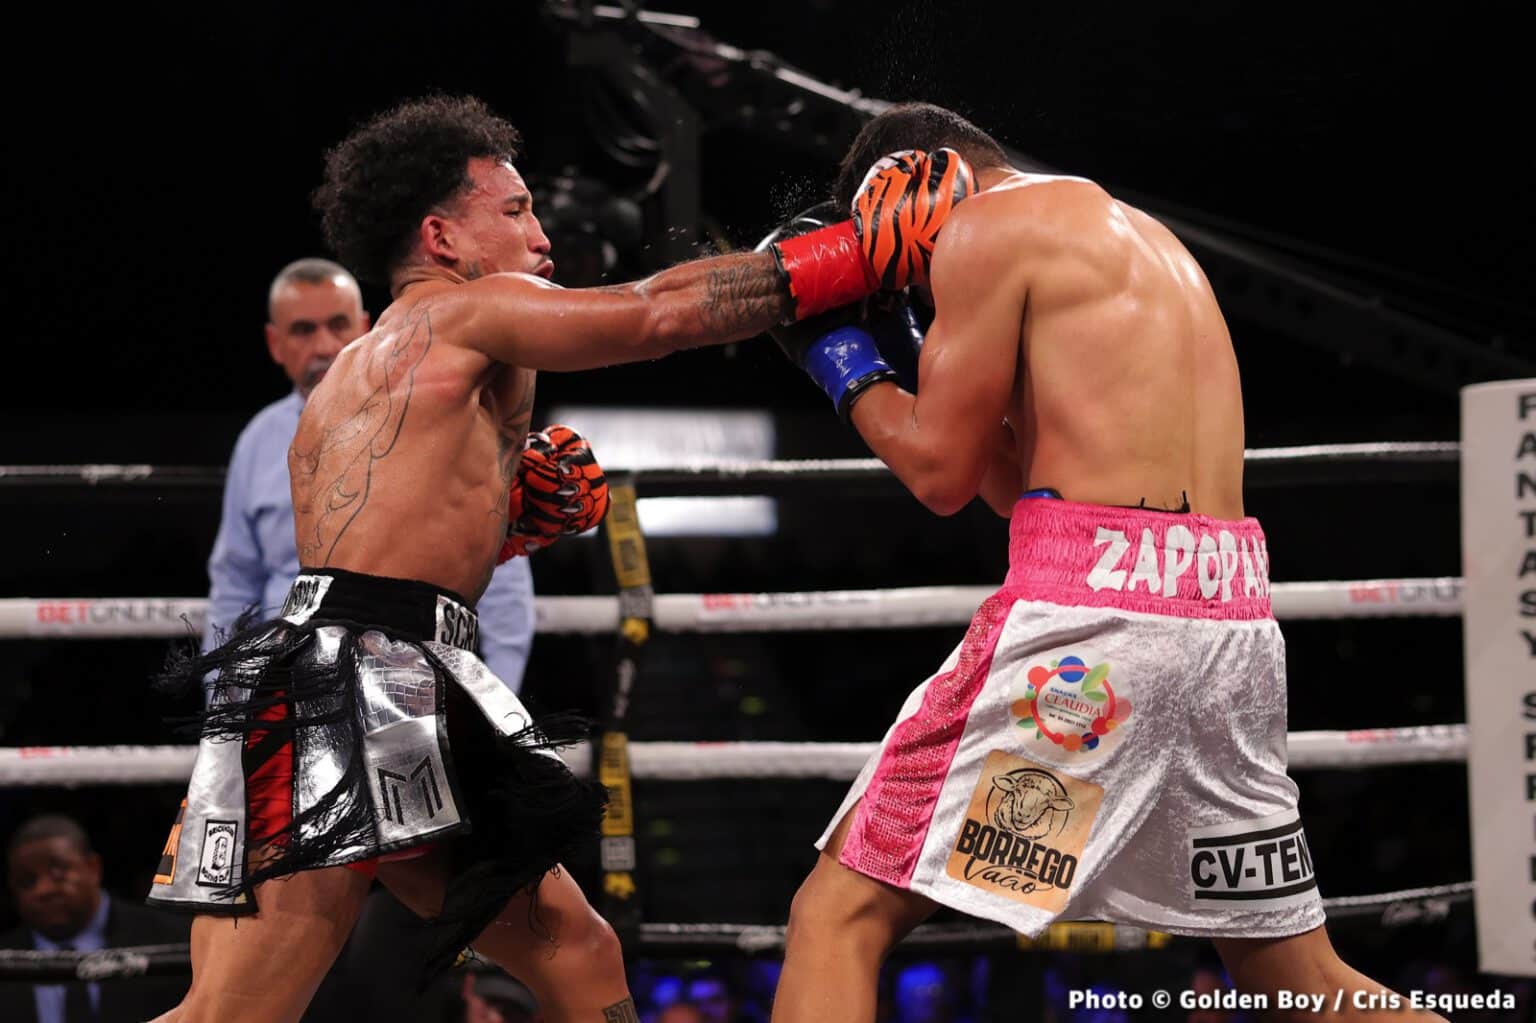 “Scrappy” Ramirez defeats Padilla - Boxing Results